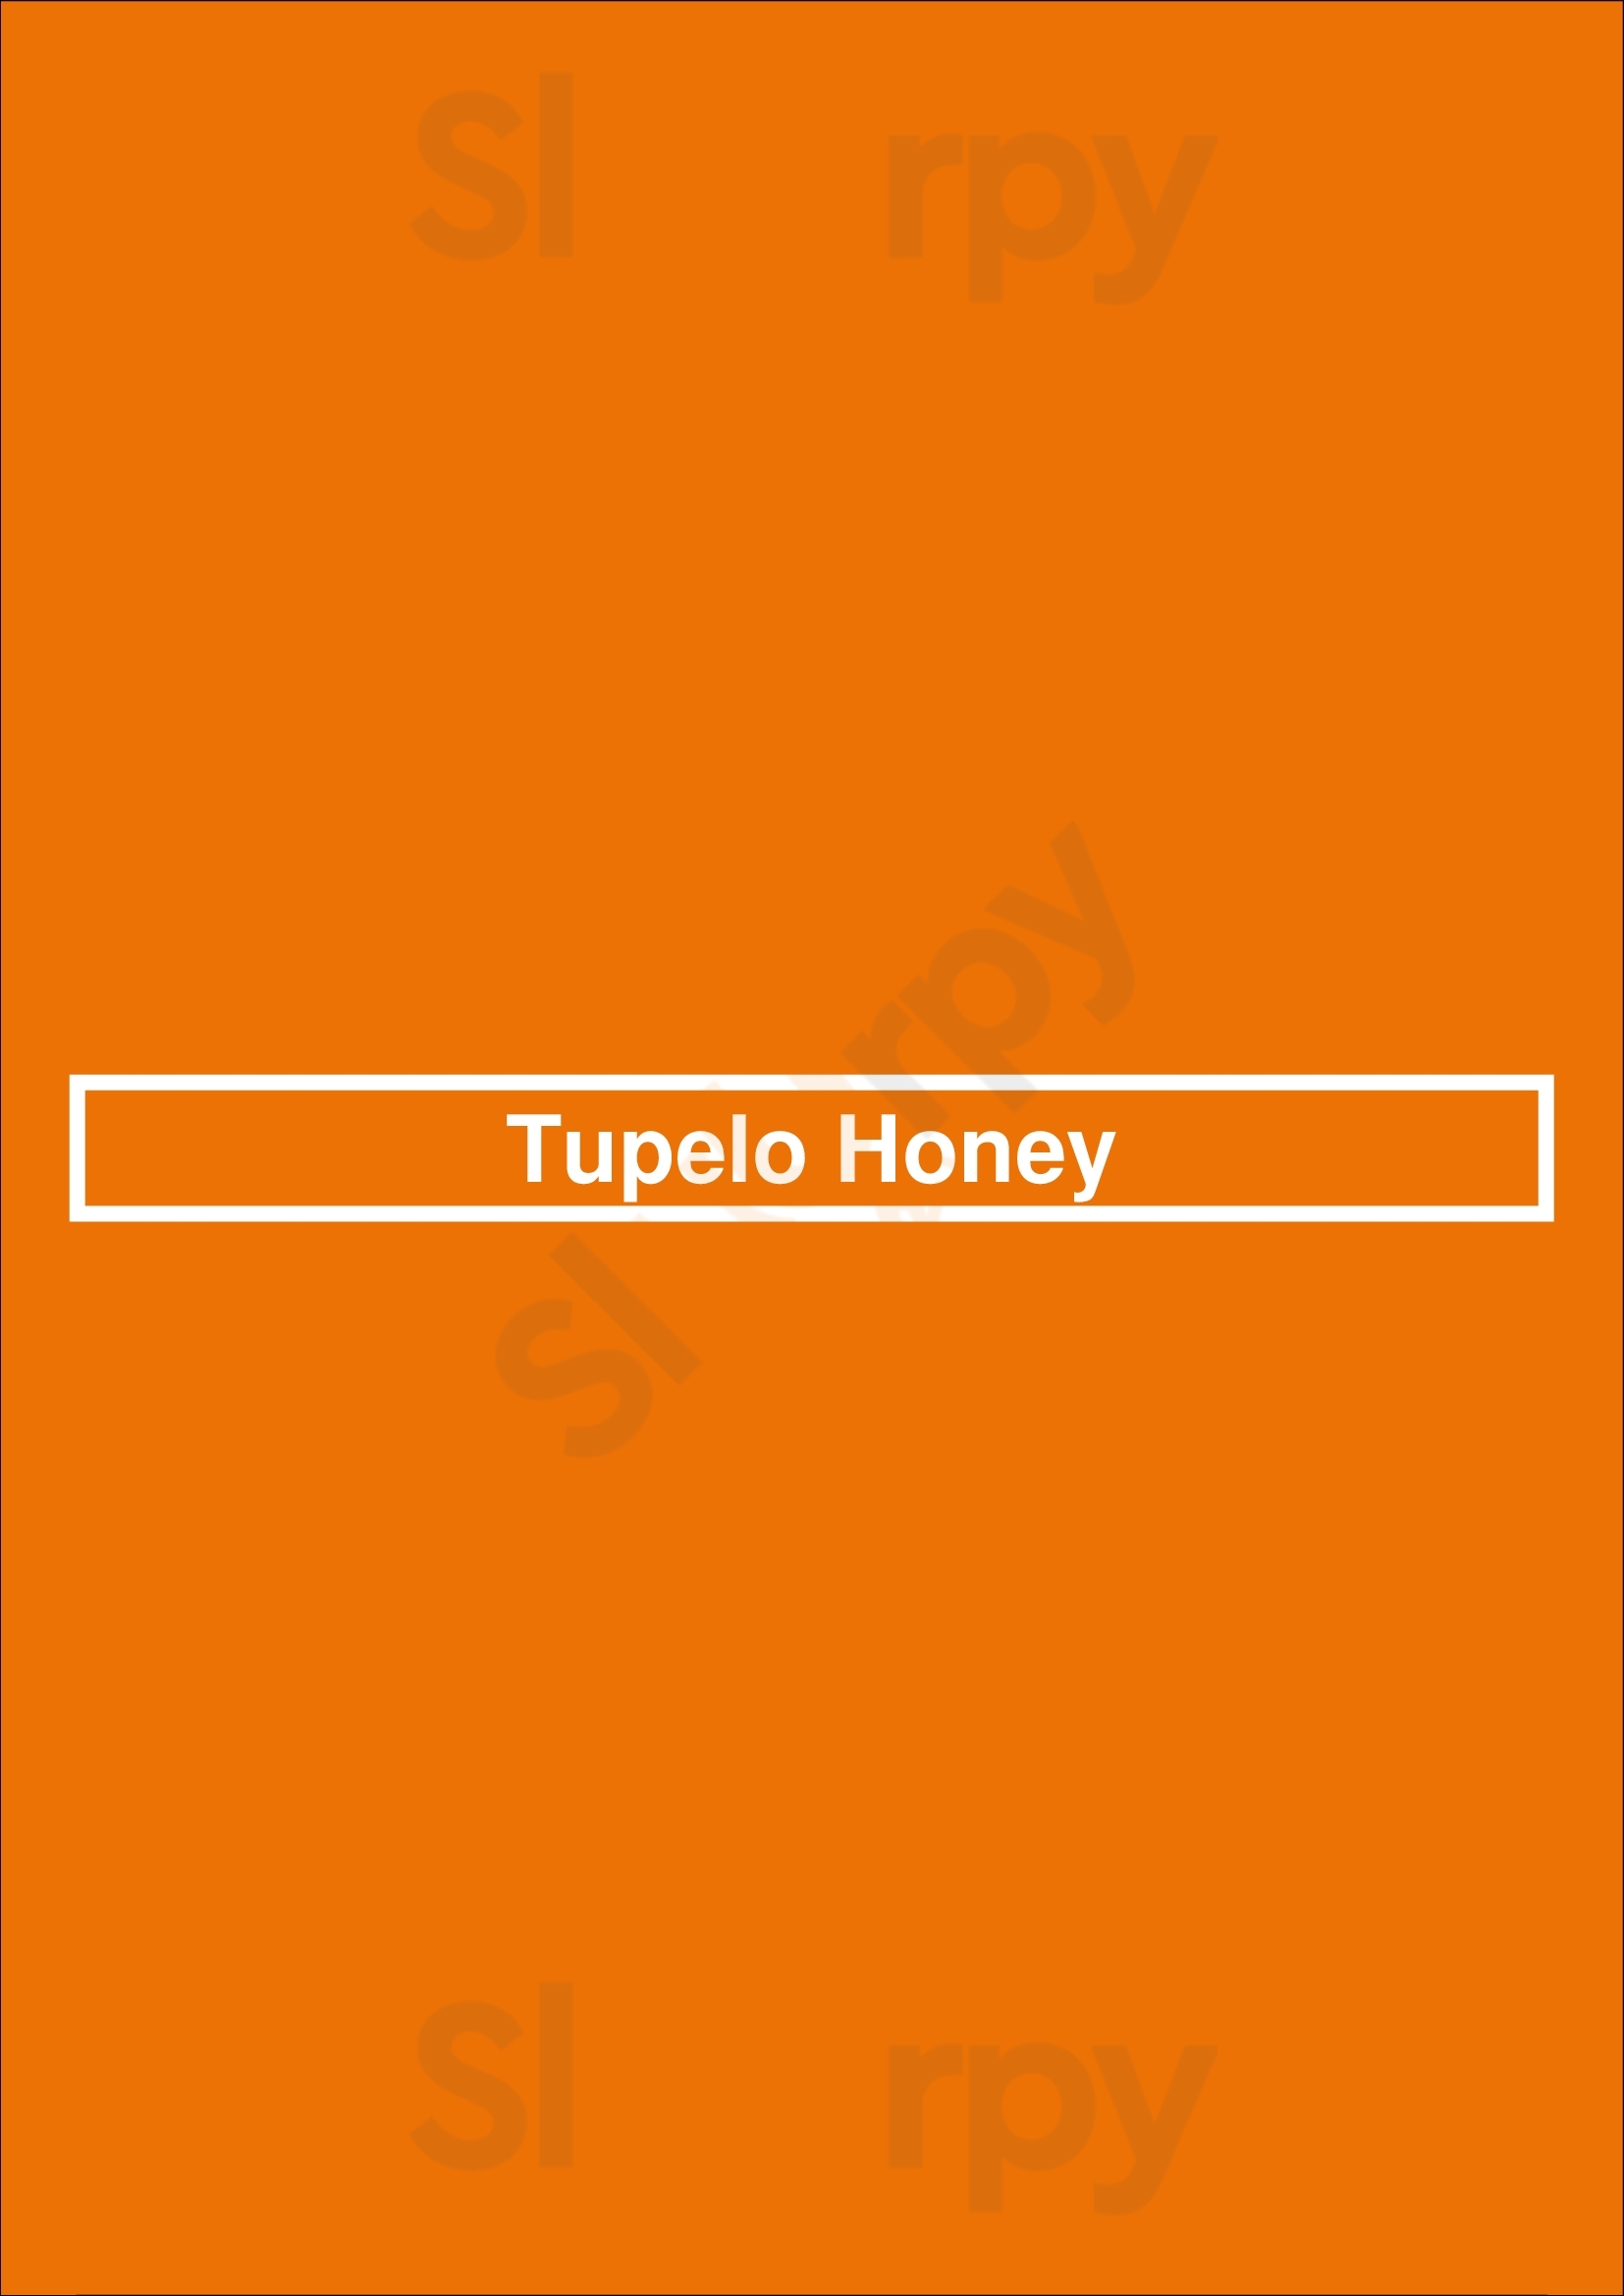 Tupelo Honey Southern Kitchen & Bar Arlington Menu - 1